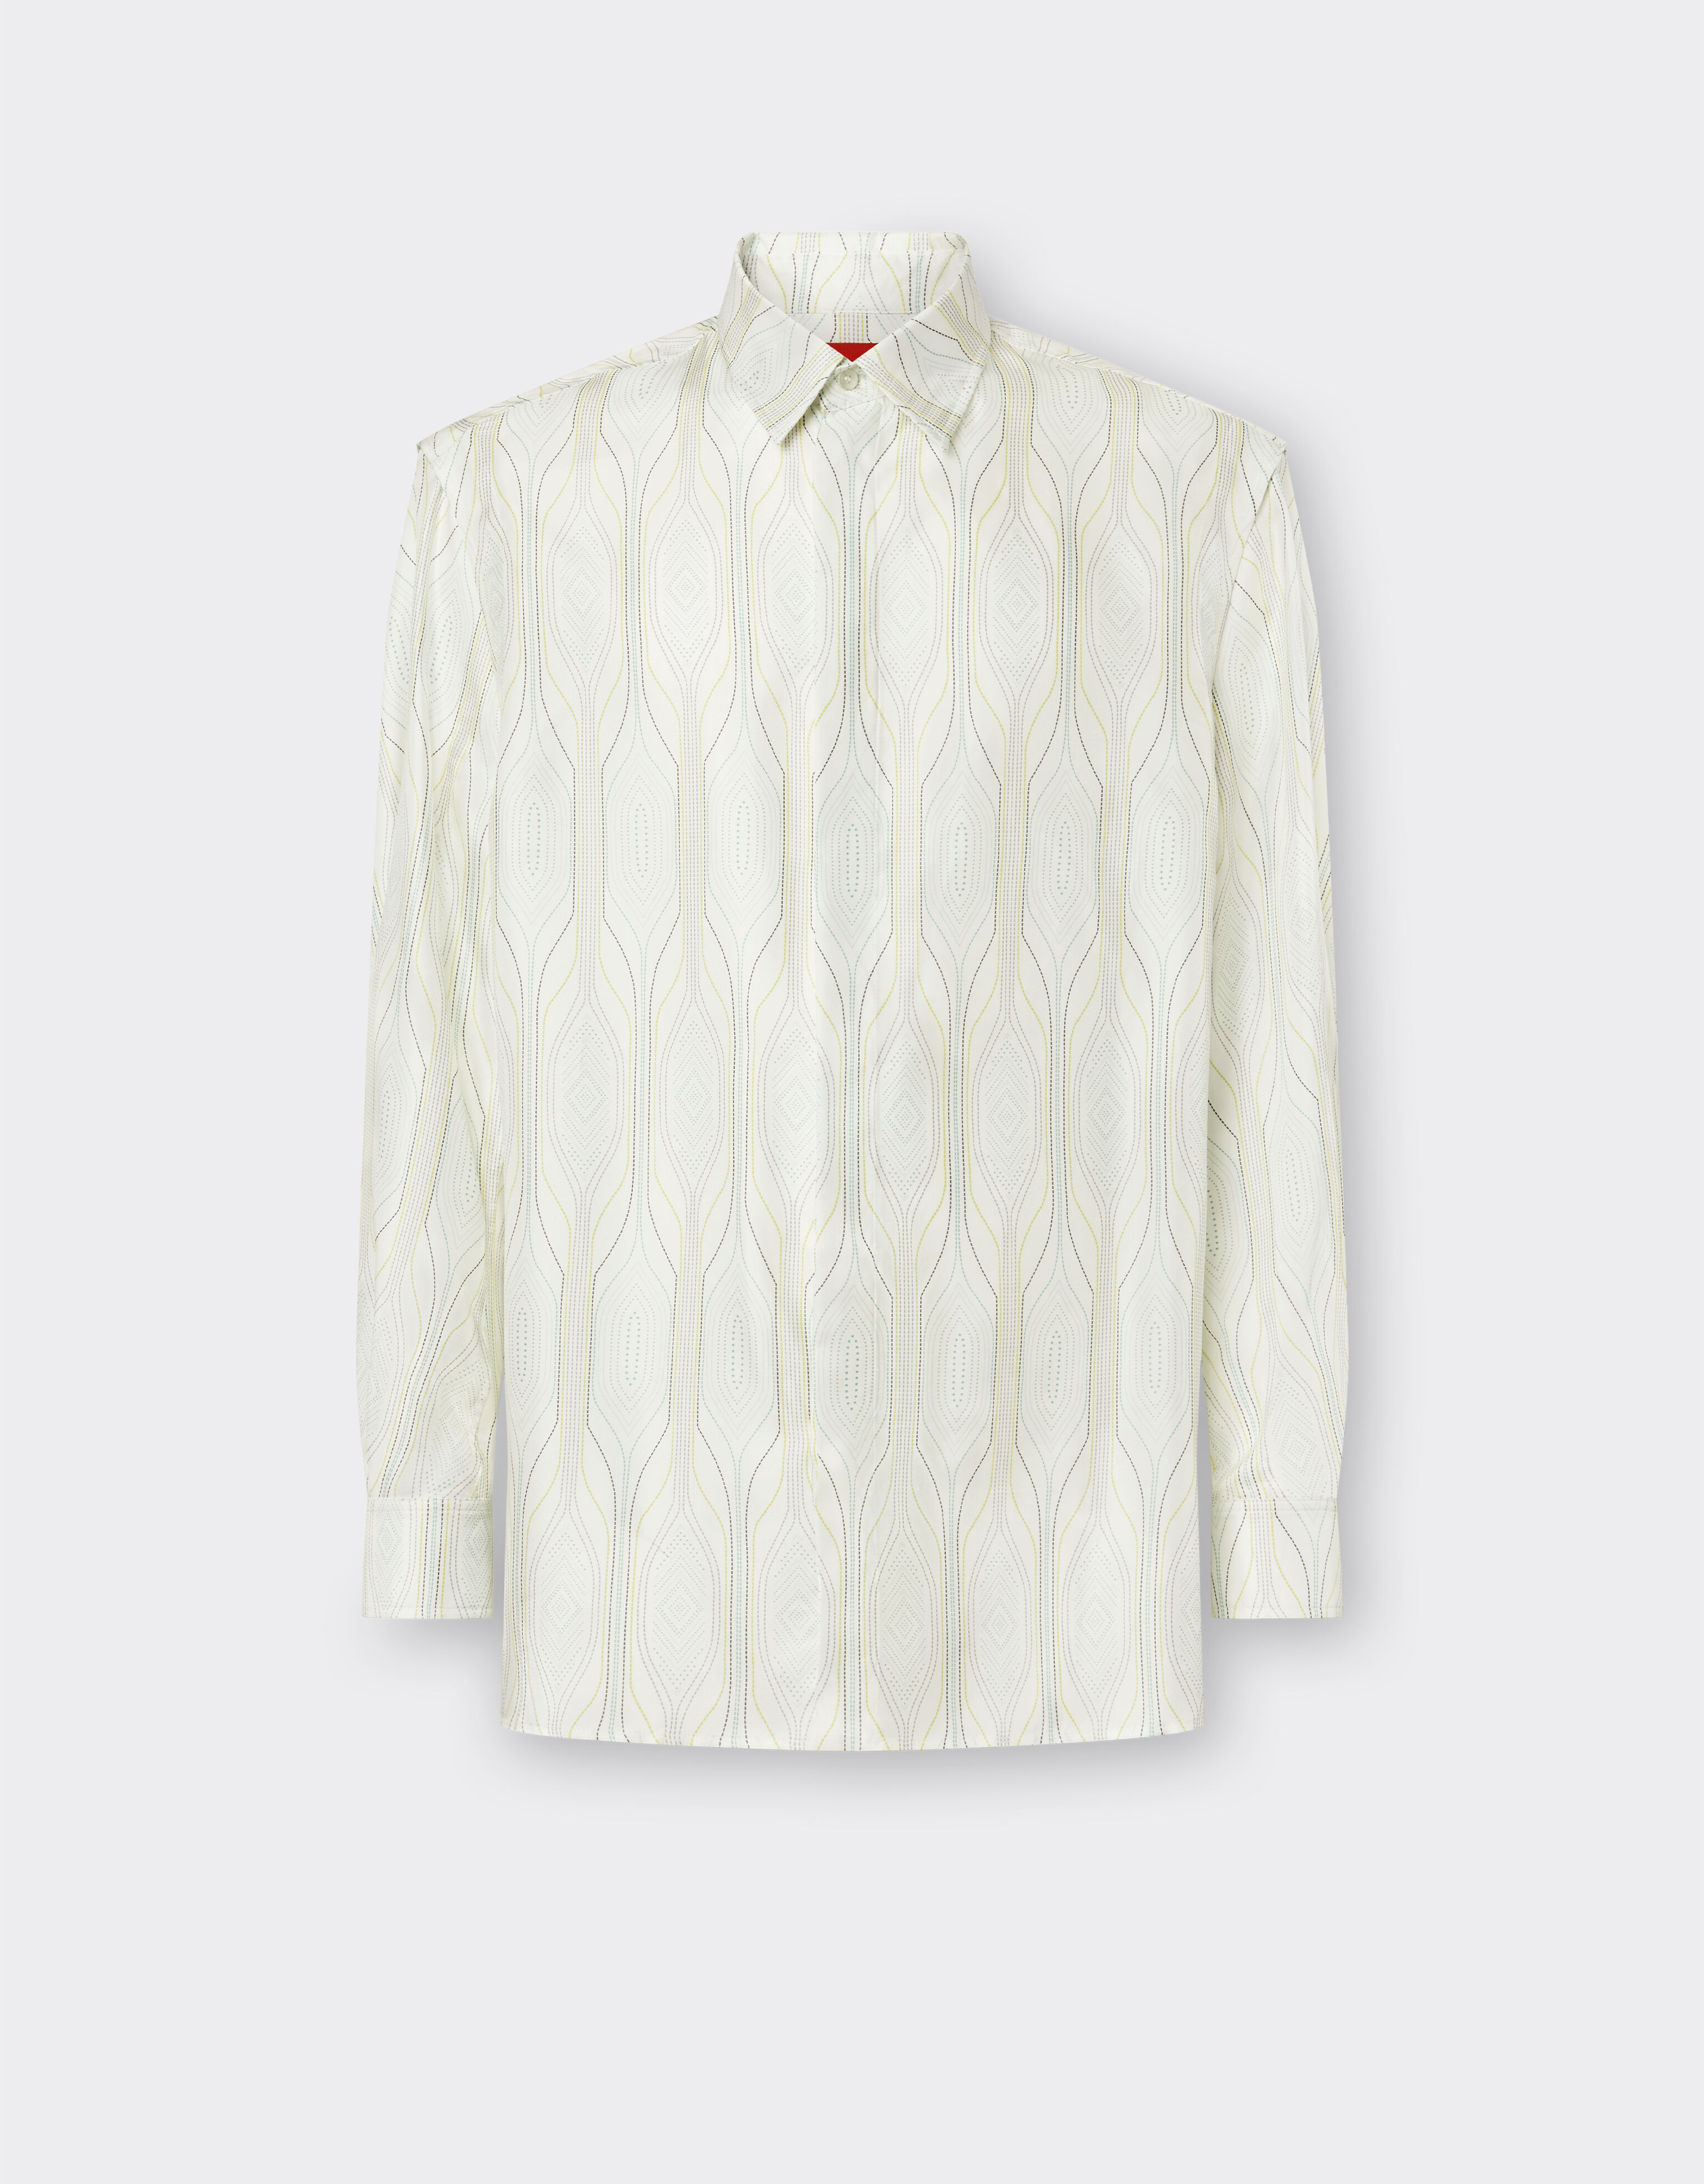 Ferrari Miami collection long-sleeved shirt in silk Aquamarine 21253f